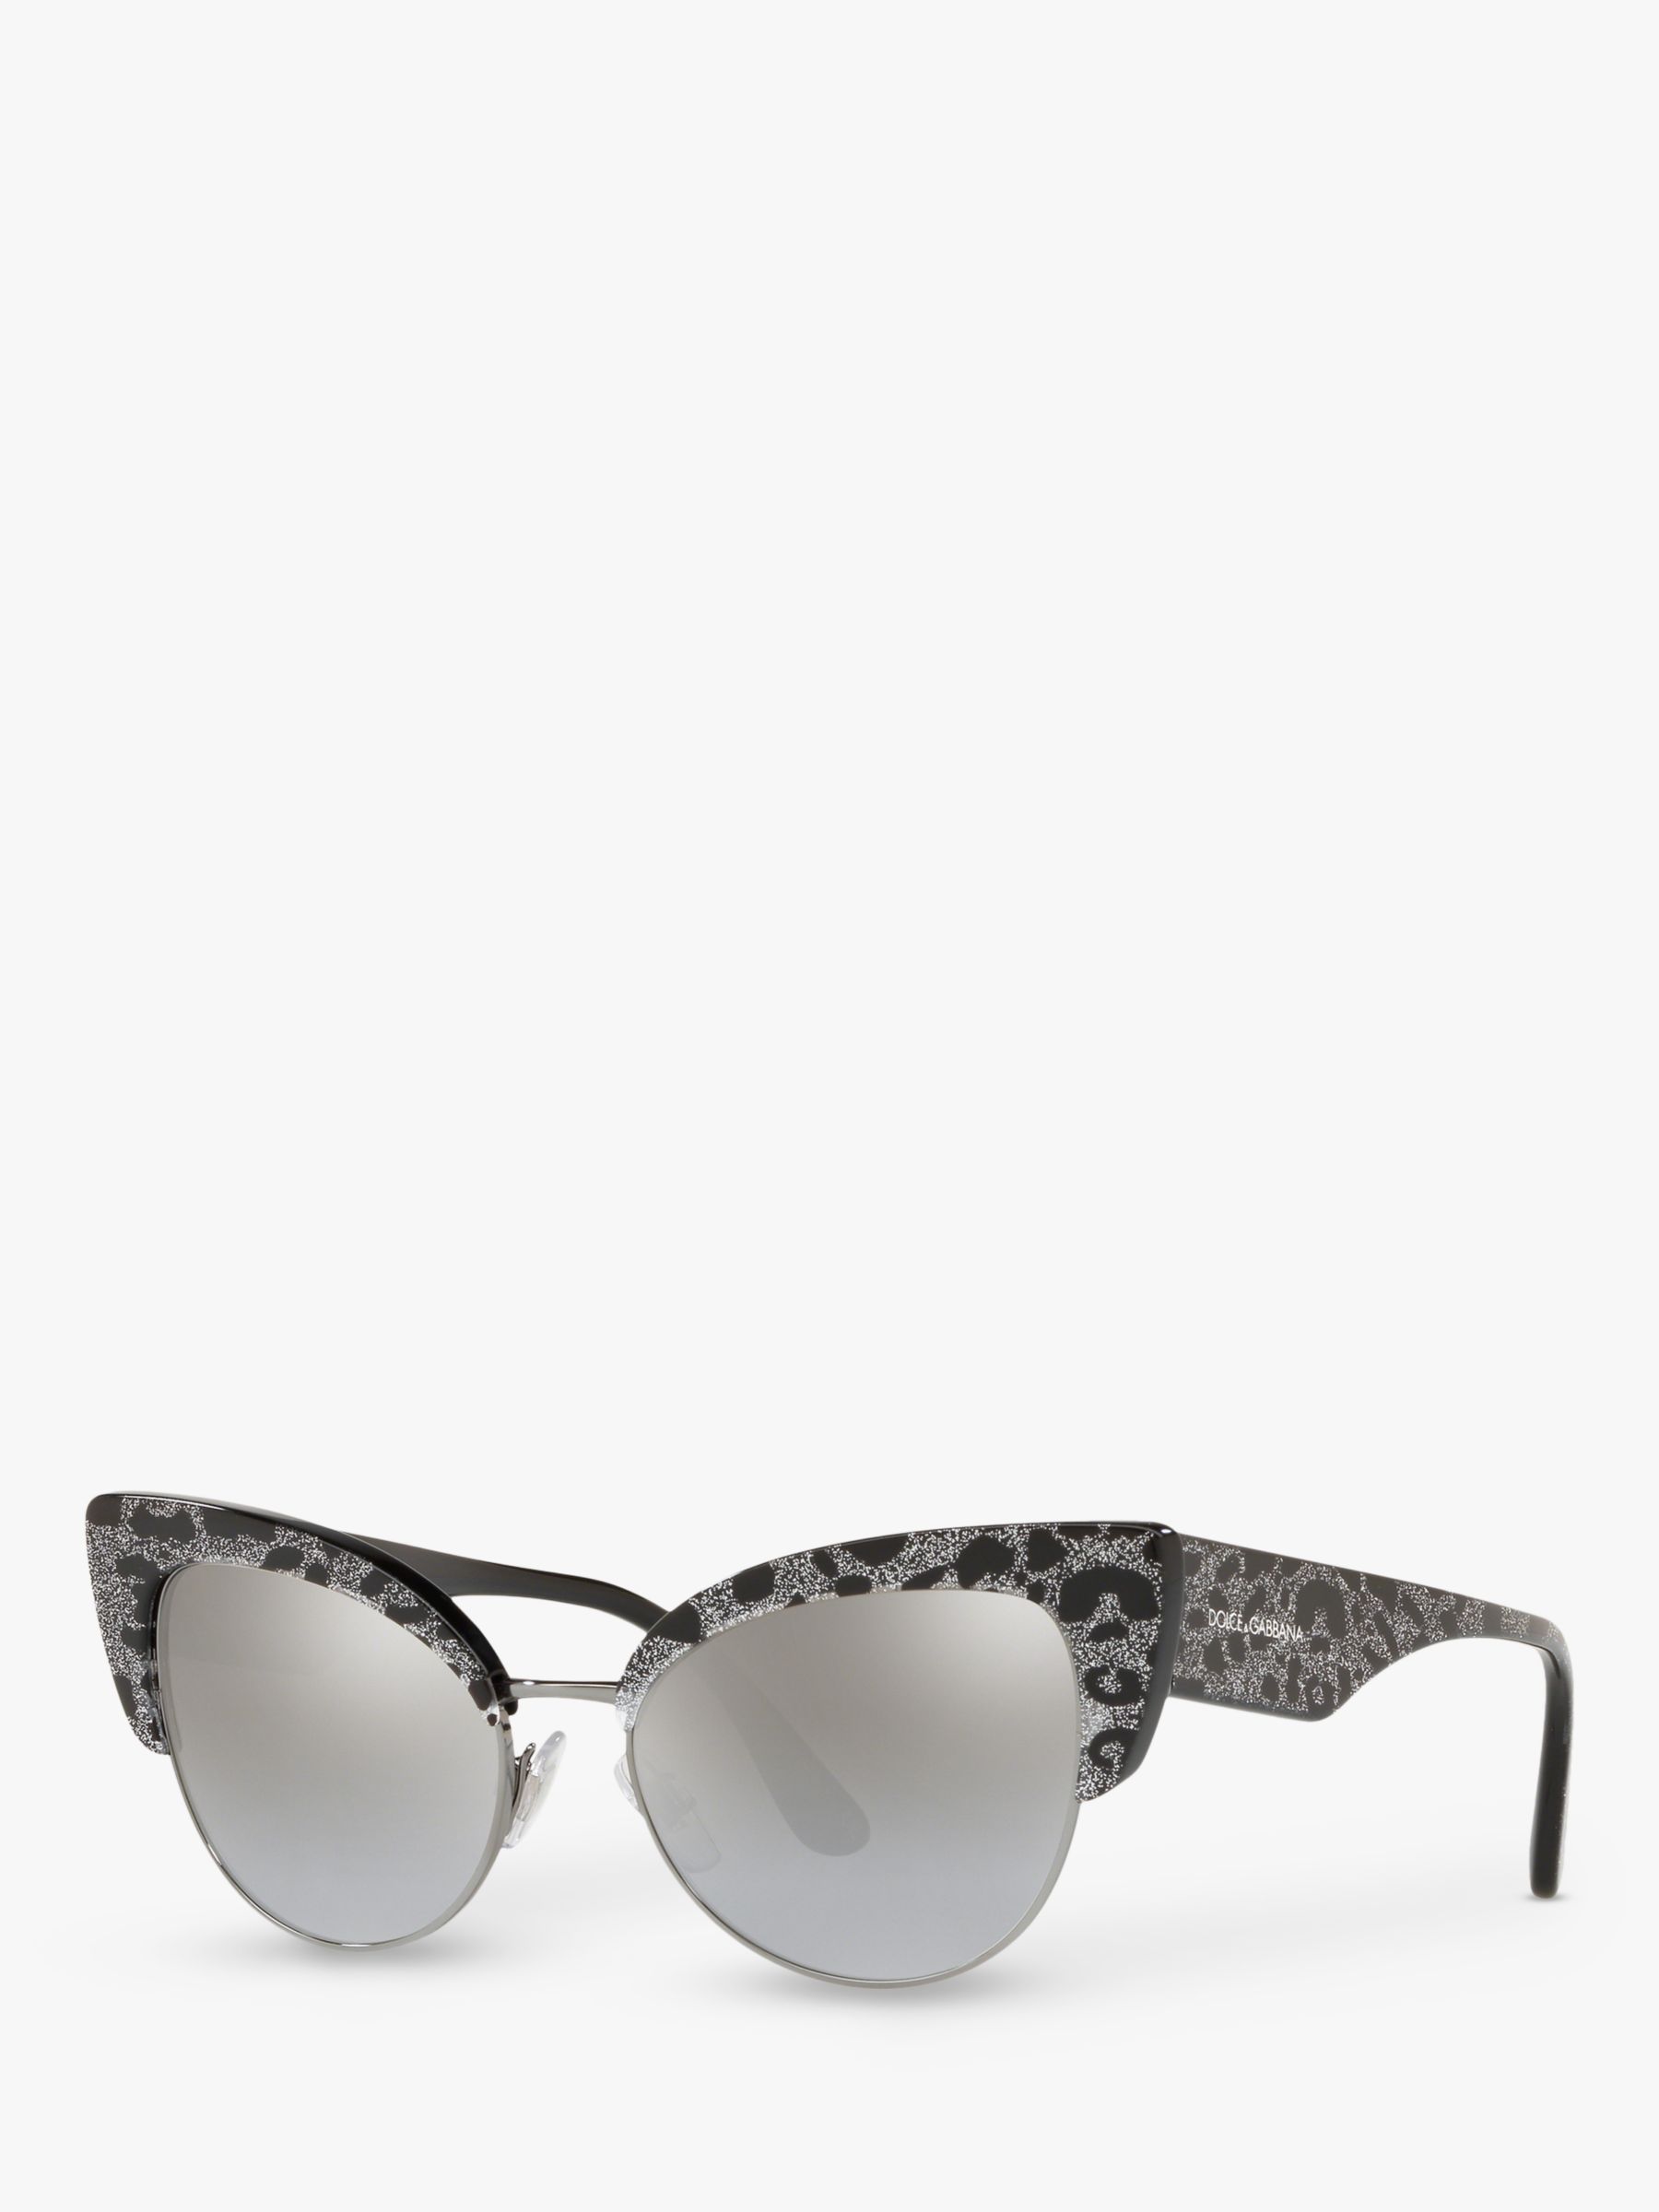 dolce and gabbana black cat eye sunglasses